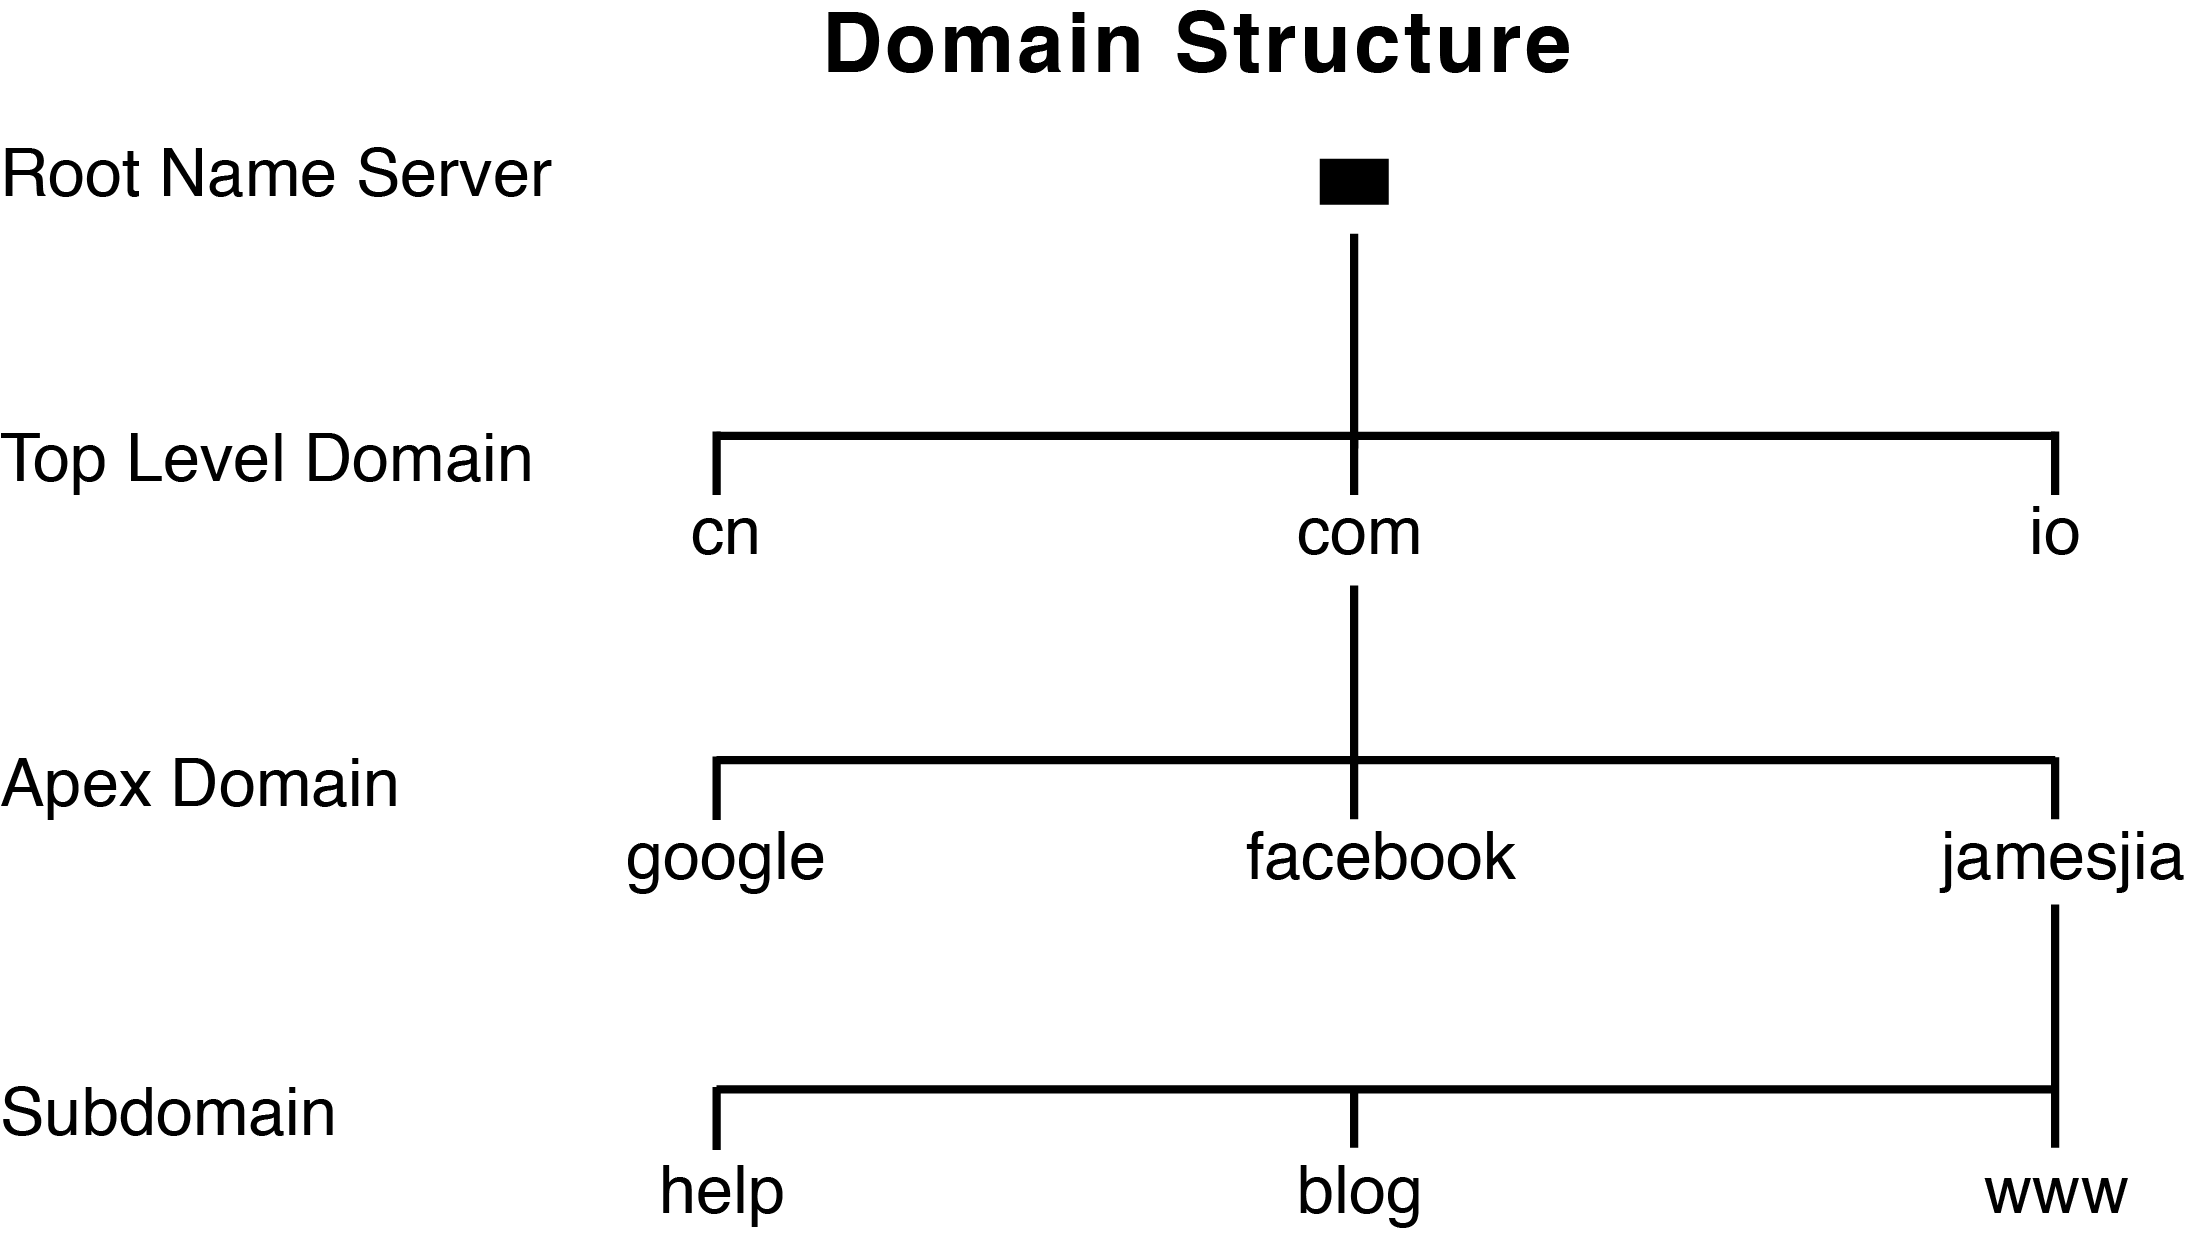 Domain Hierarchy Image